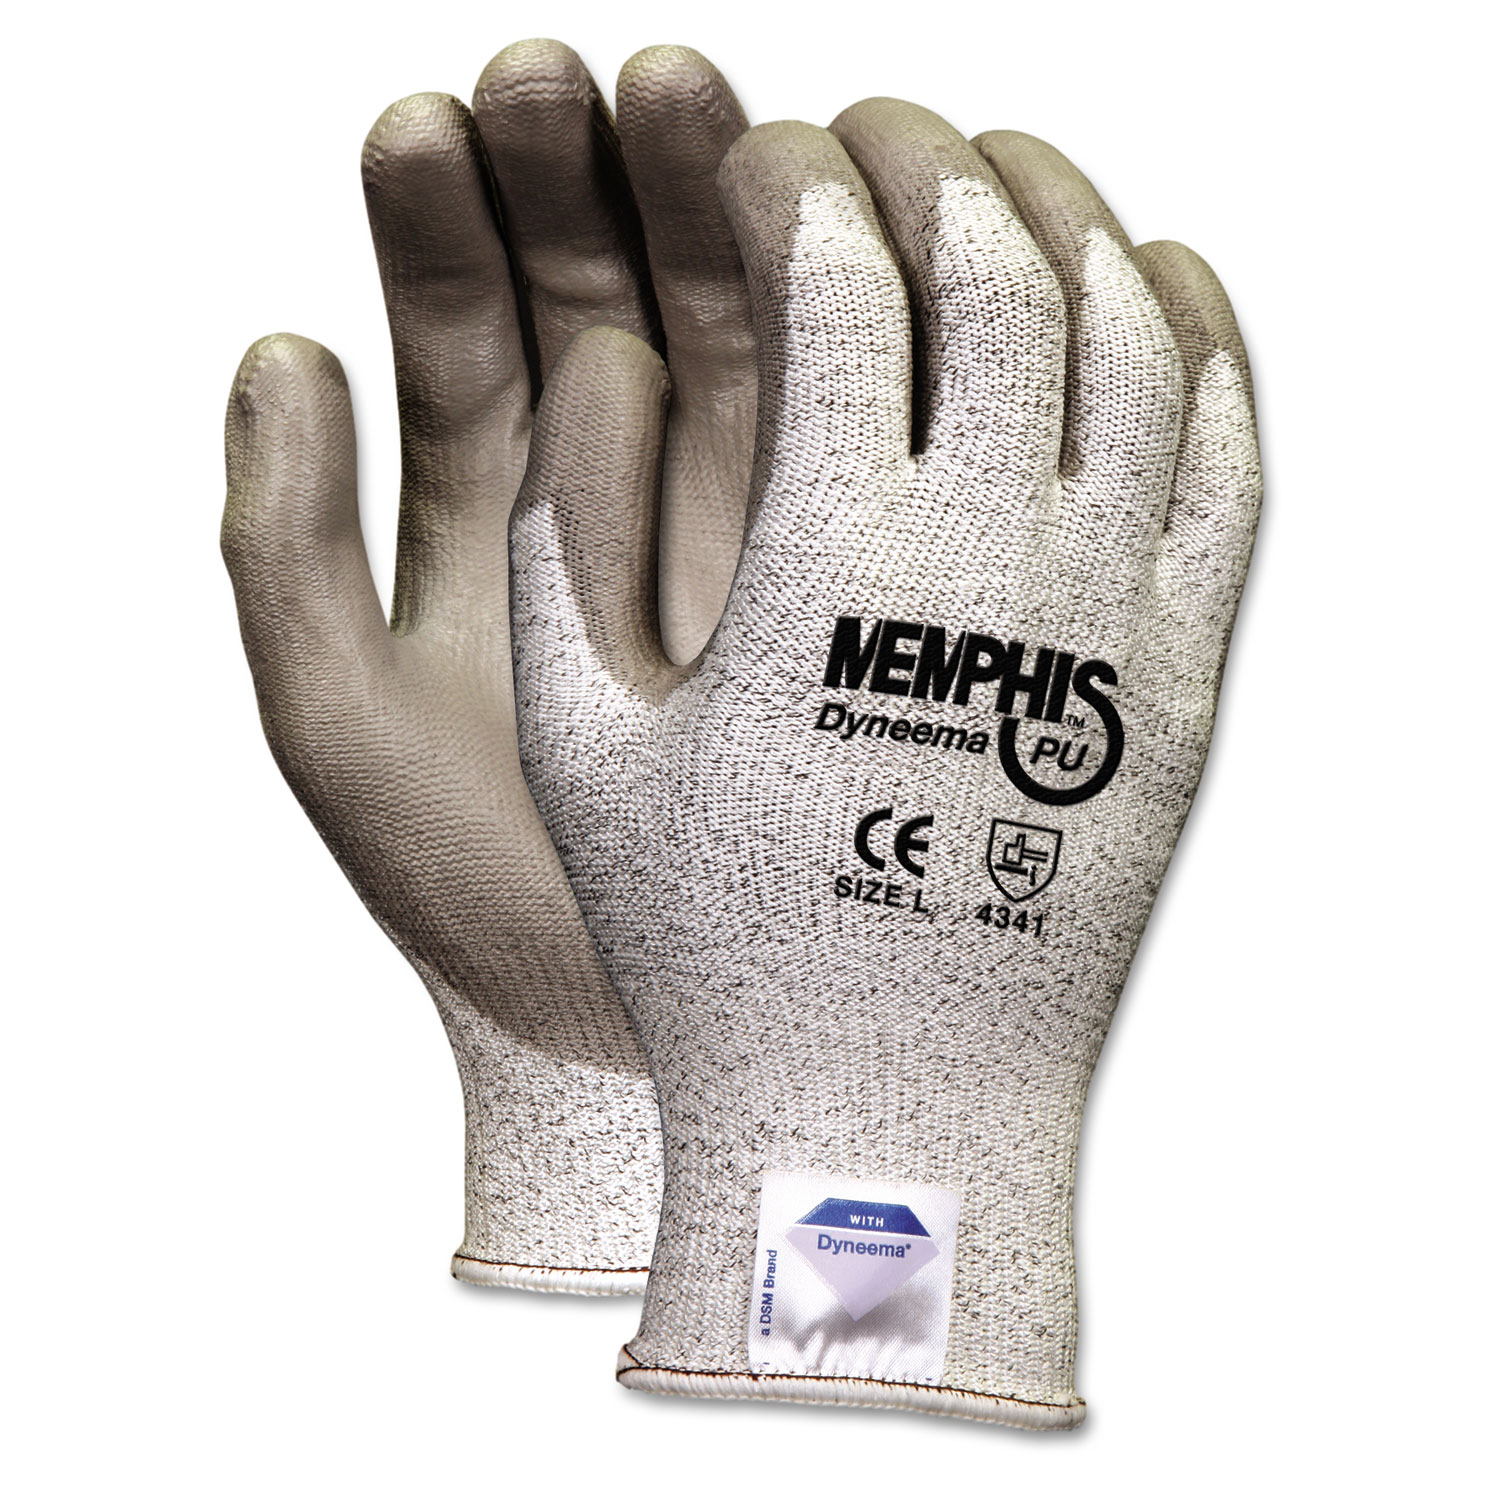  MCR Safety 9672L Memphis Dyneema Polyurethane Gloves, Large, White/Gray, Pair (CRW9672L) 